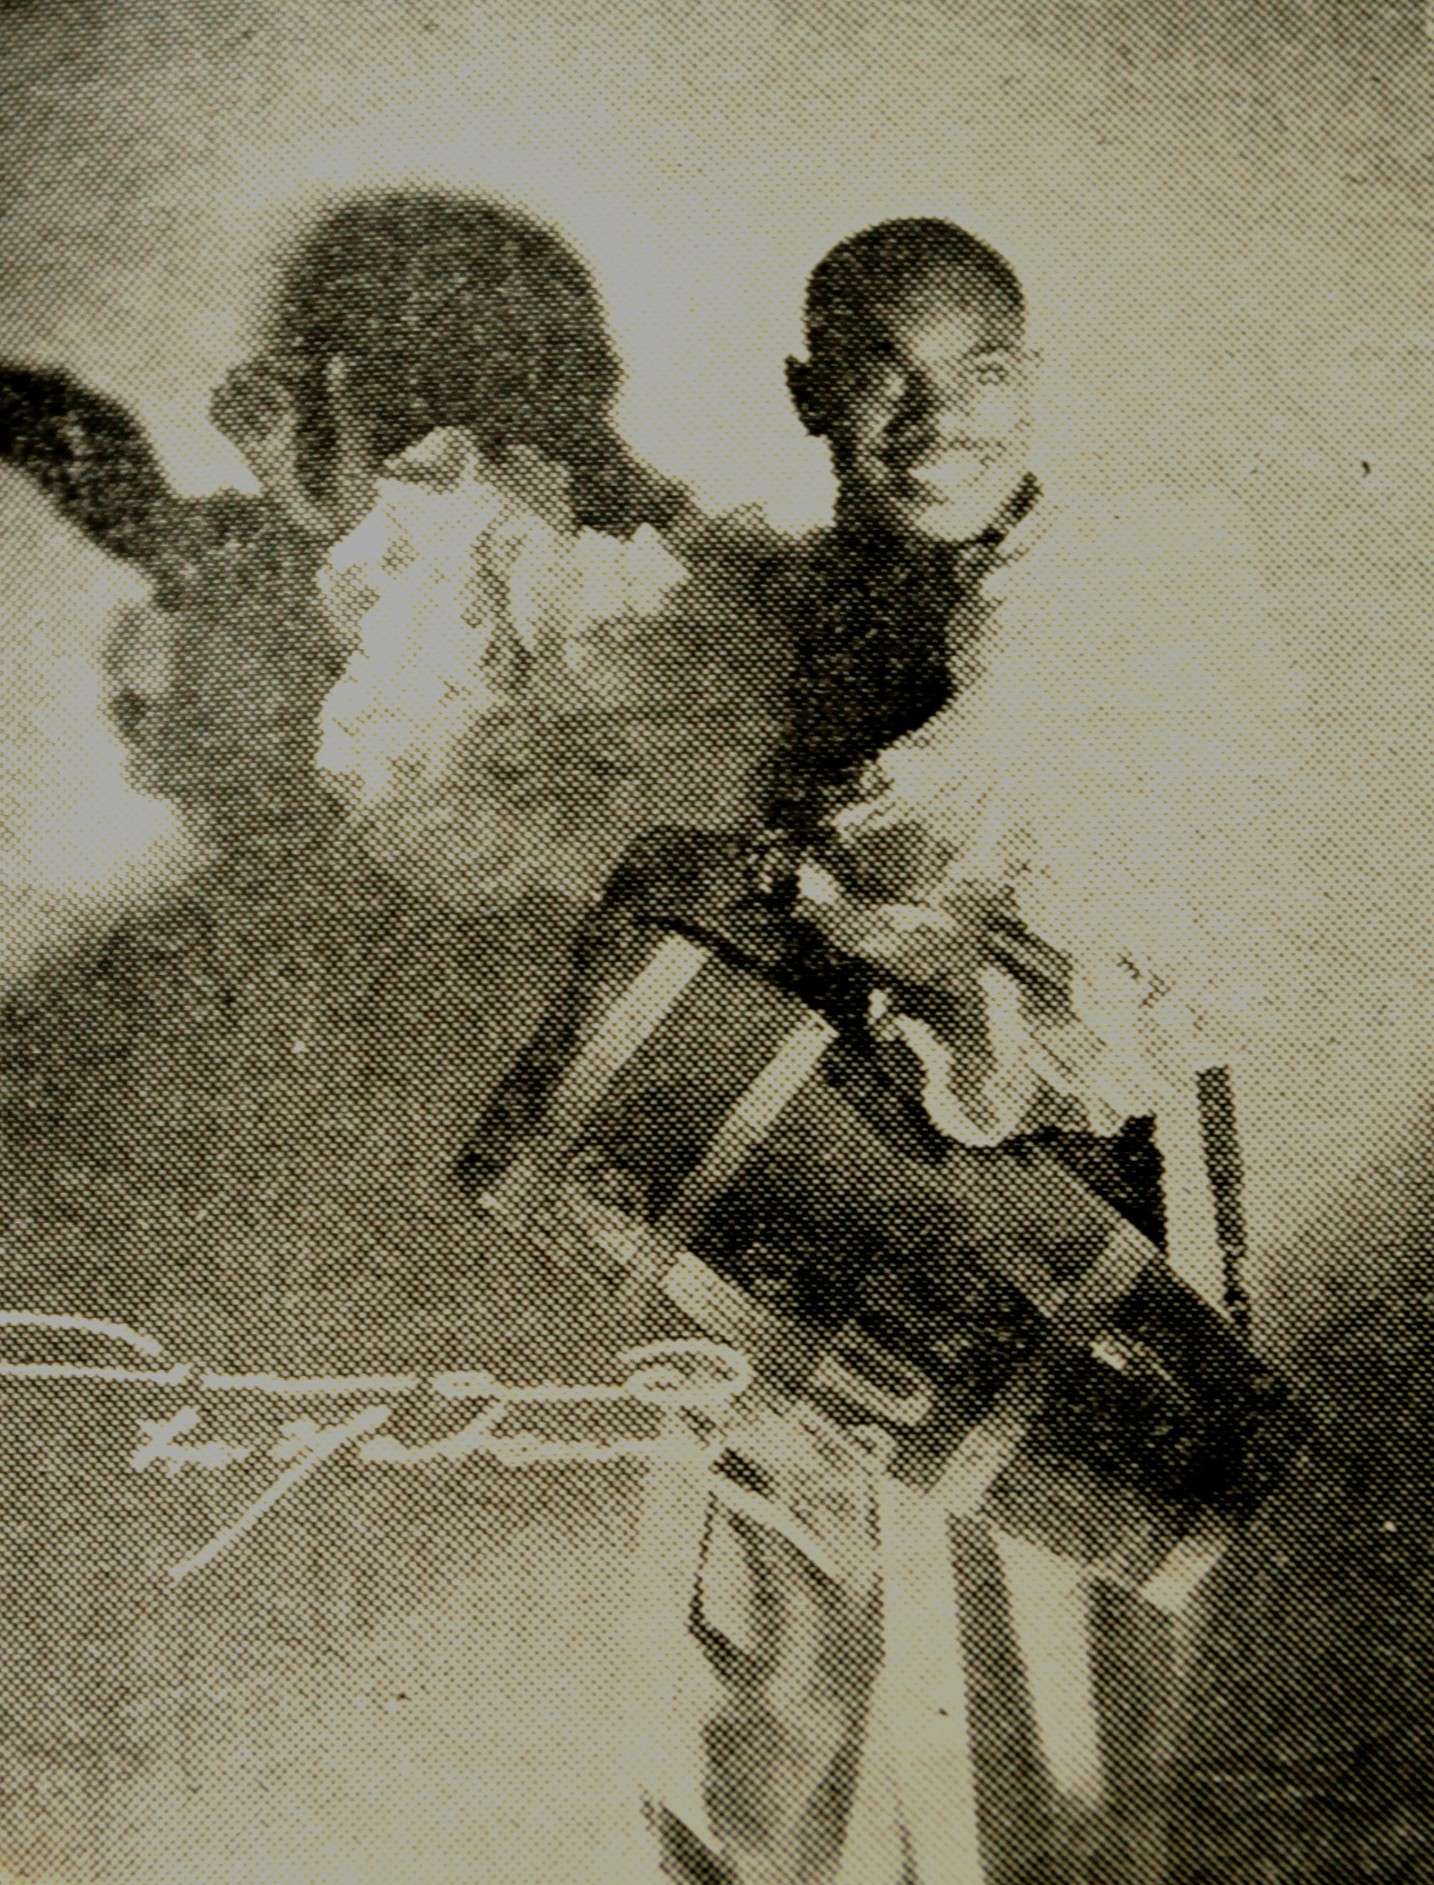 Chano Pozo fotografiado por Armand en La Habana en 1943. Archivo de la autora.